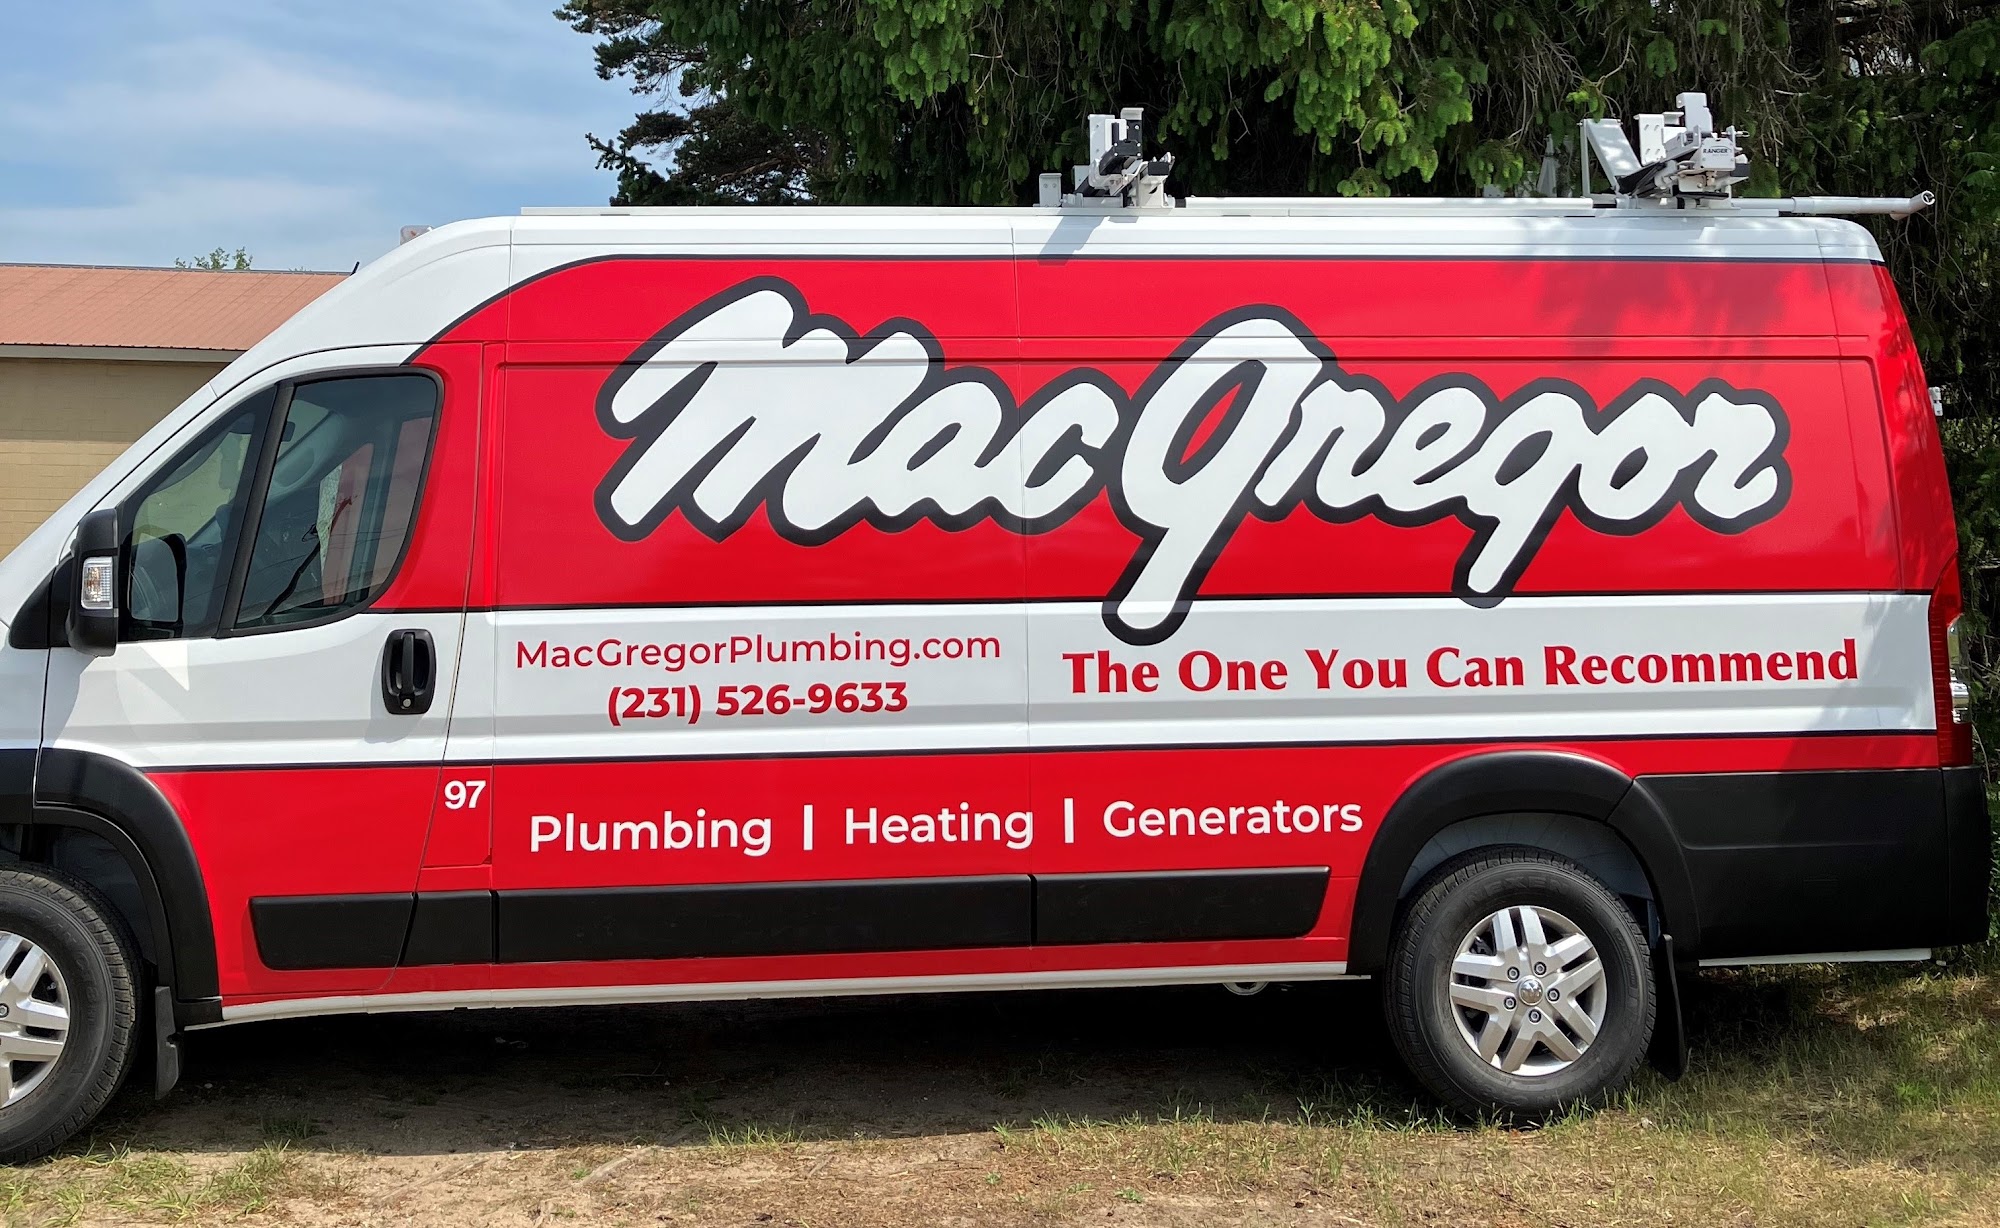 MacGregor Plumbing & Heating 235 Franklin Park, Harbor Springs Michigan 49740